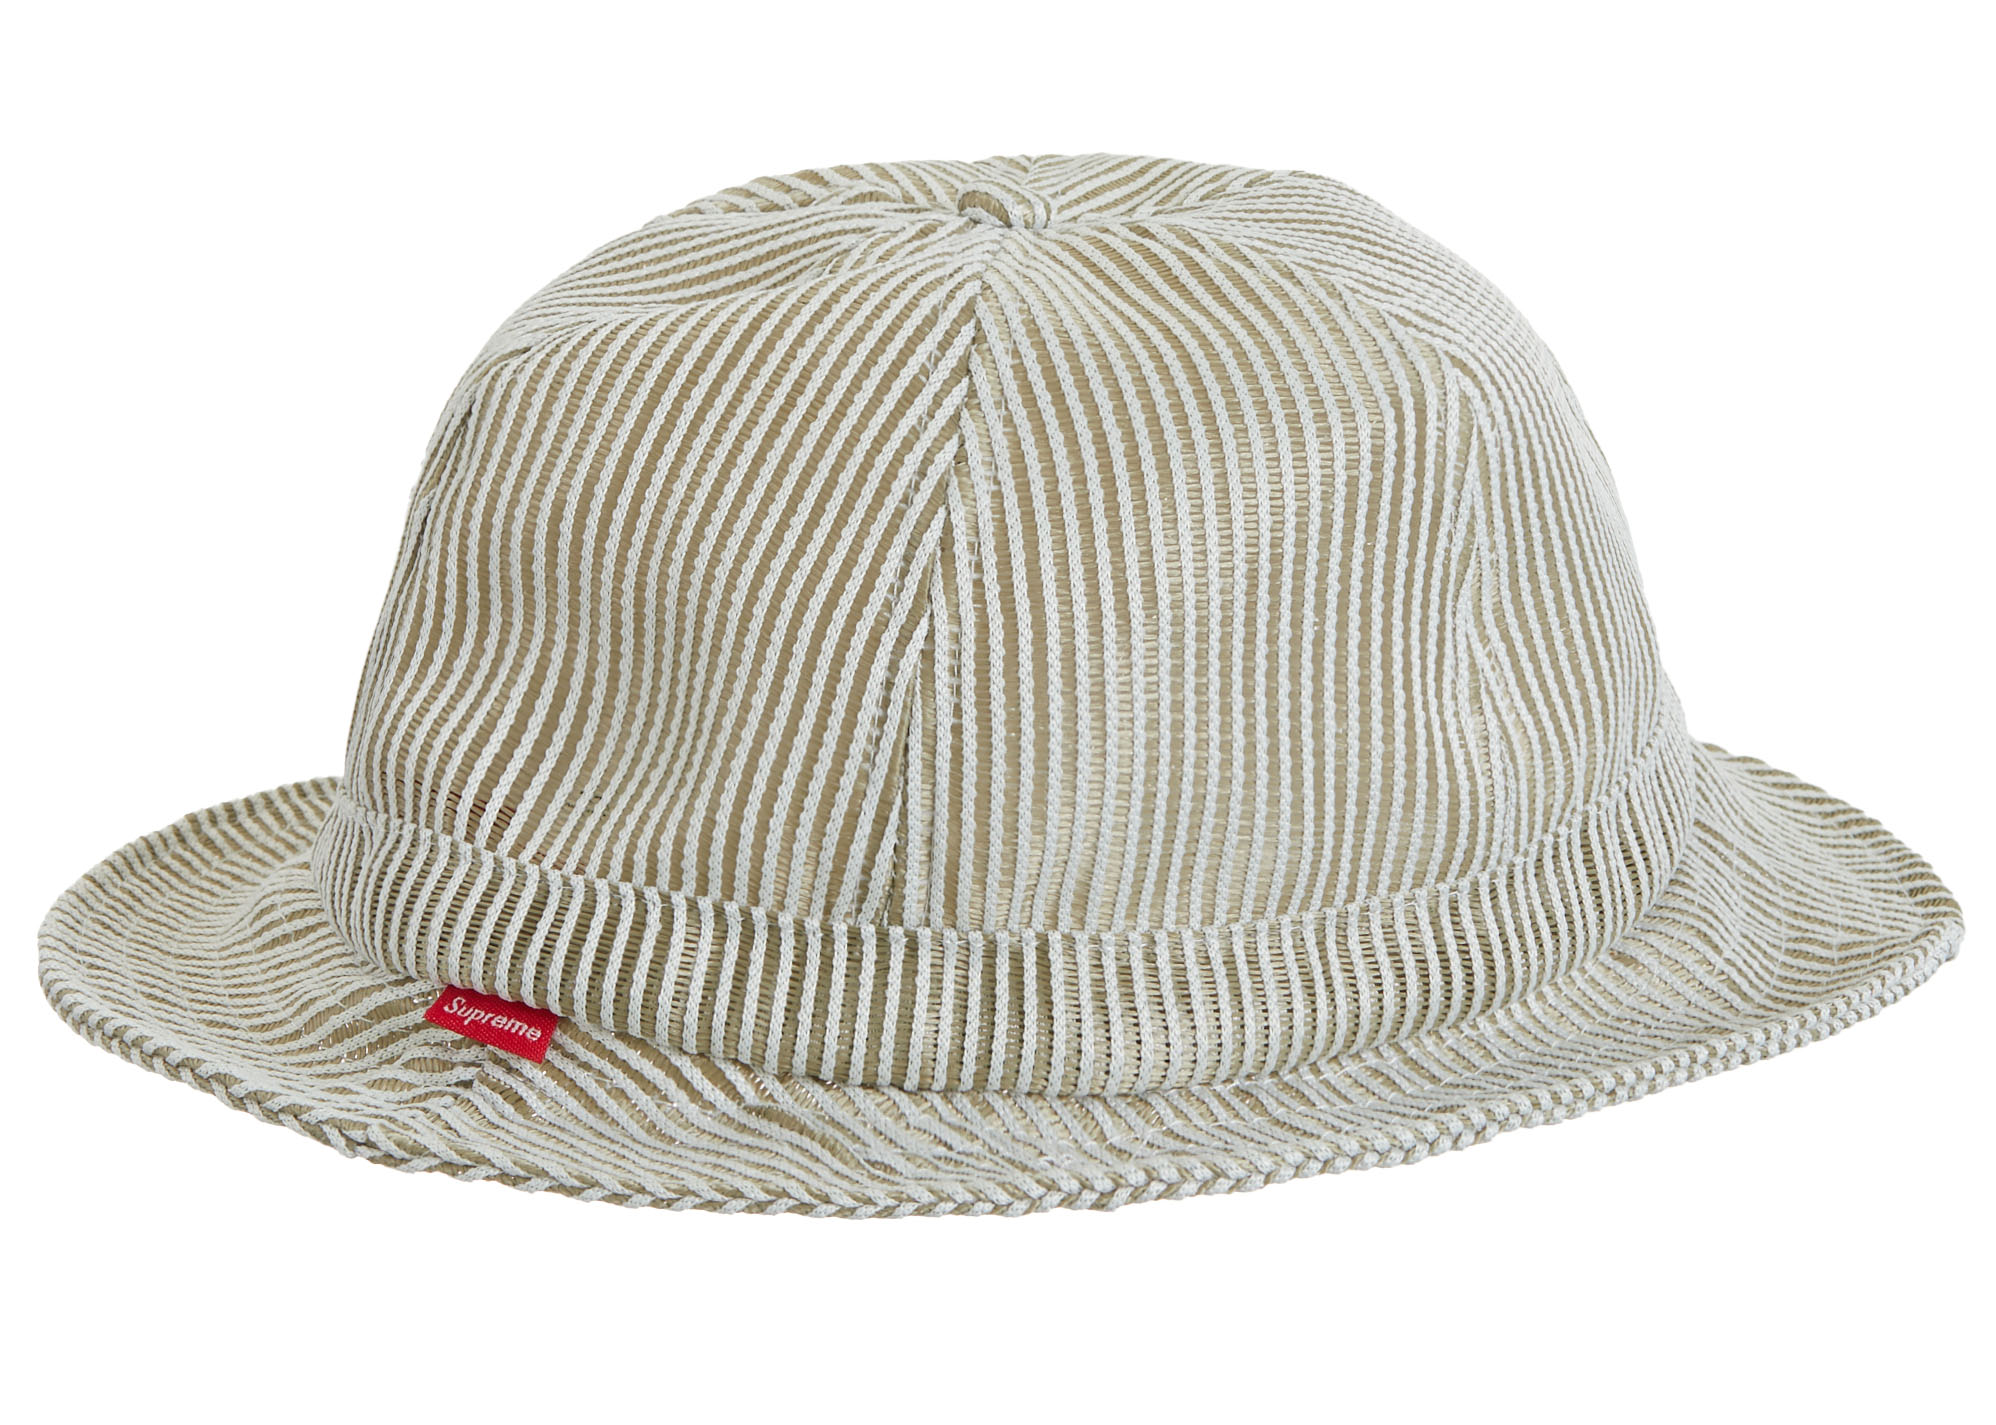 Supreme Stripe Mesh Bell Hat Taupe